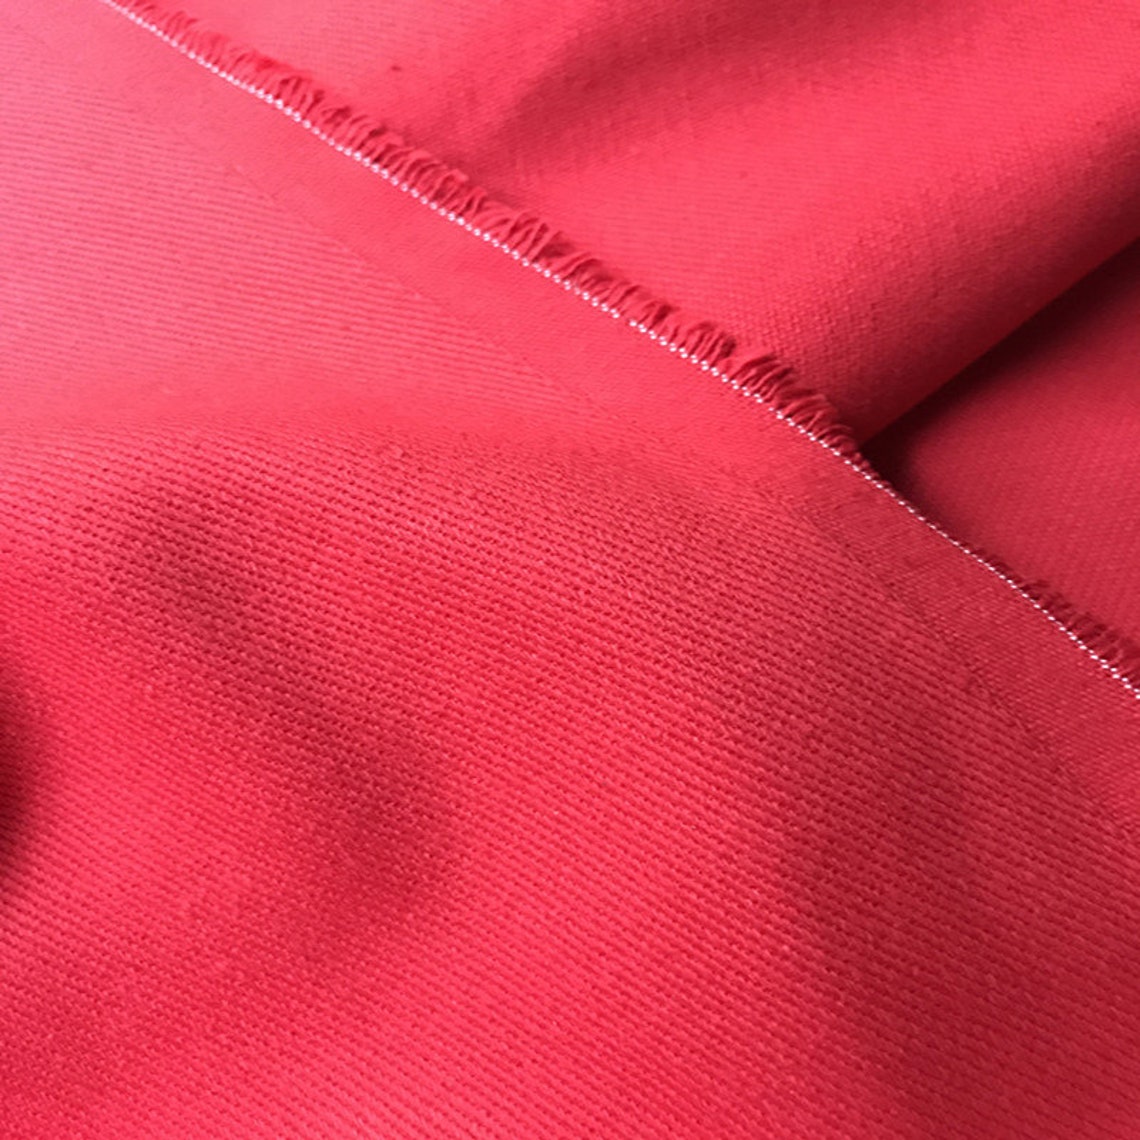 Washed Denim Fabric Red Cotton Denim Fabric By the half yard | Etsy